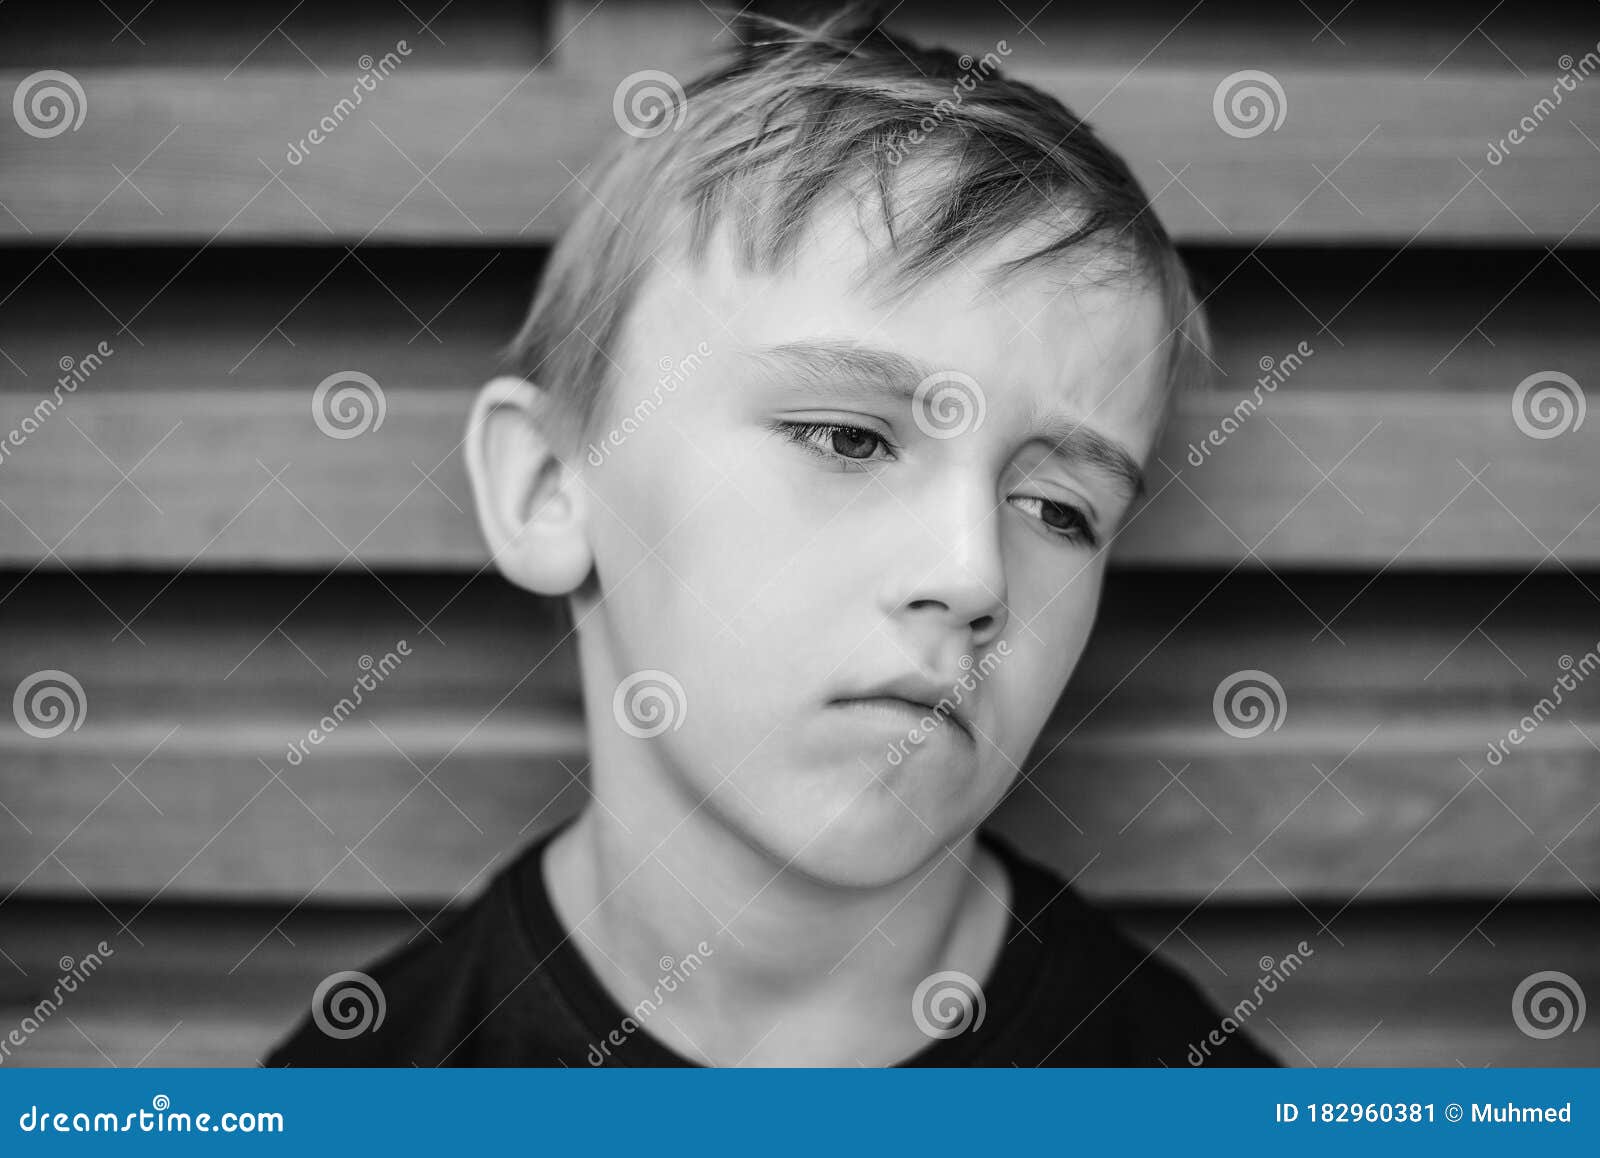 Unhappy Lonely Boy Thinking about Something. Boredom Child Stock Image ...